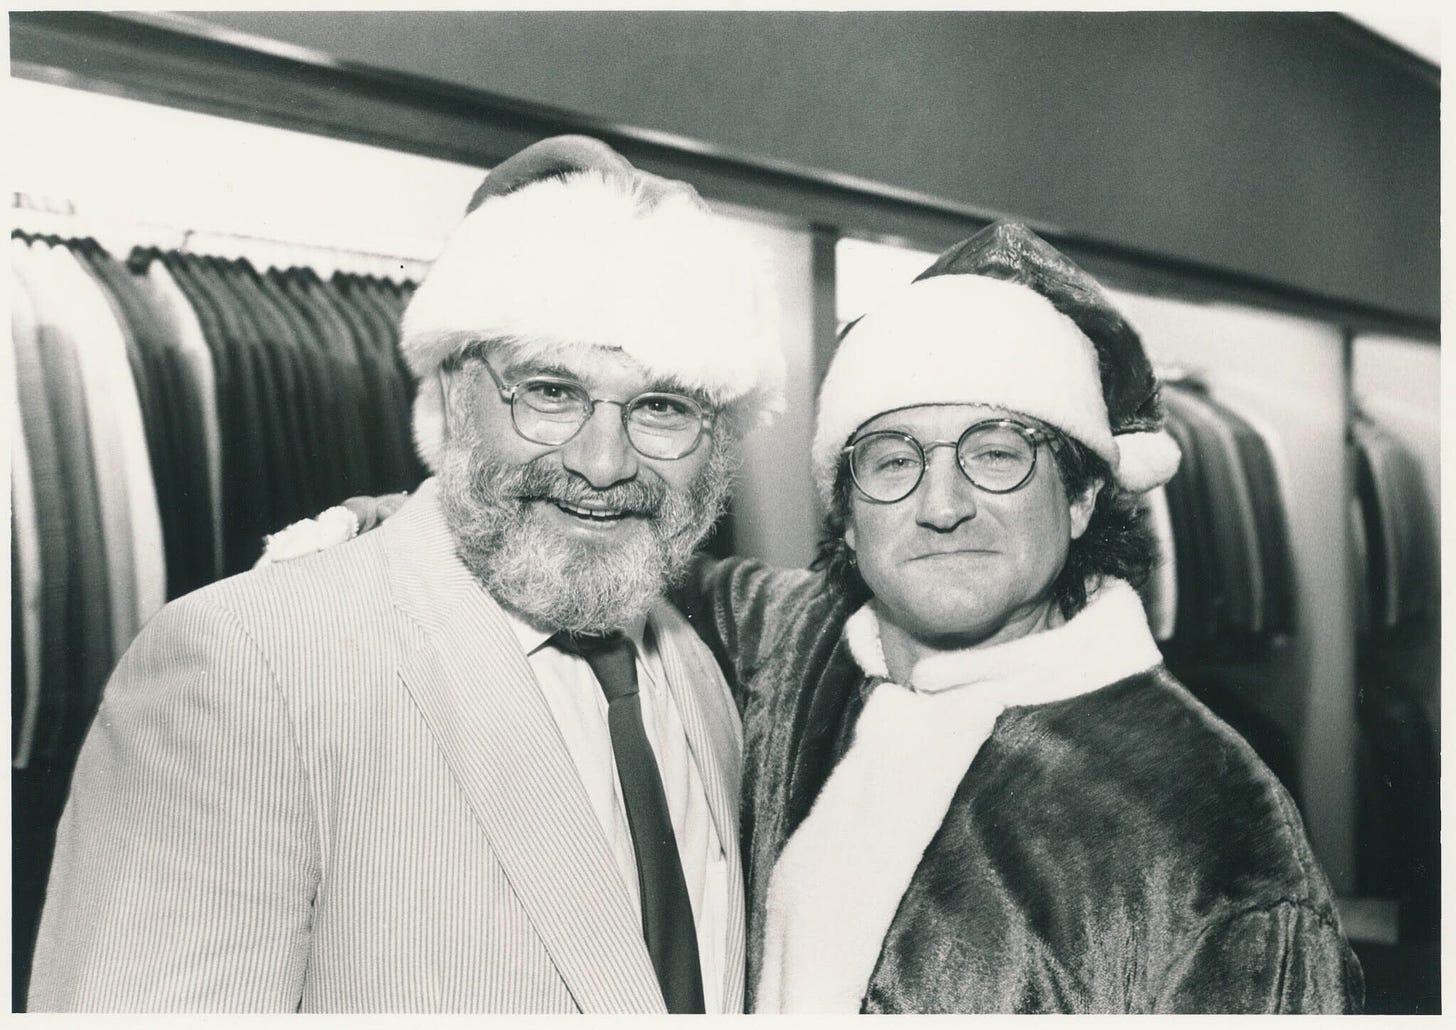 تويتر \ Oliver Sacks Fdn. على تويتر: "Oliver Sacks and Robin Williams play  Santa for a fundraiser ca. early 1990s. Happy holidays to all!  https://t.co/2JiGCY3SOU"